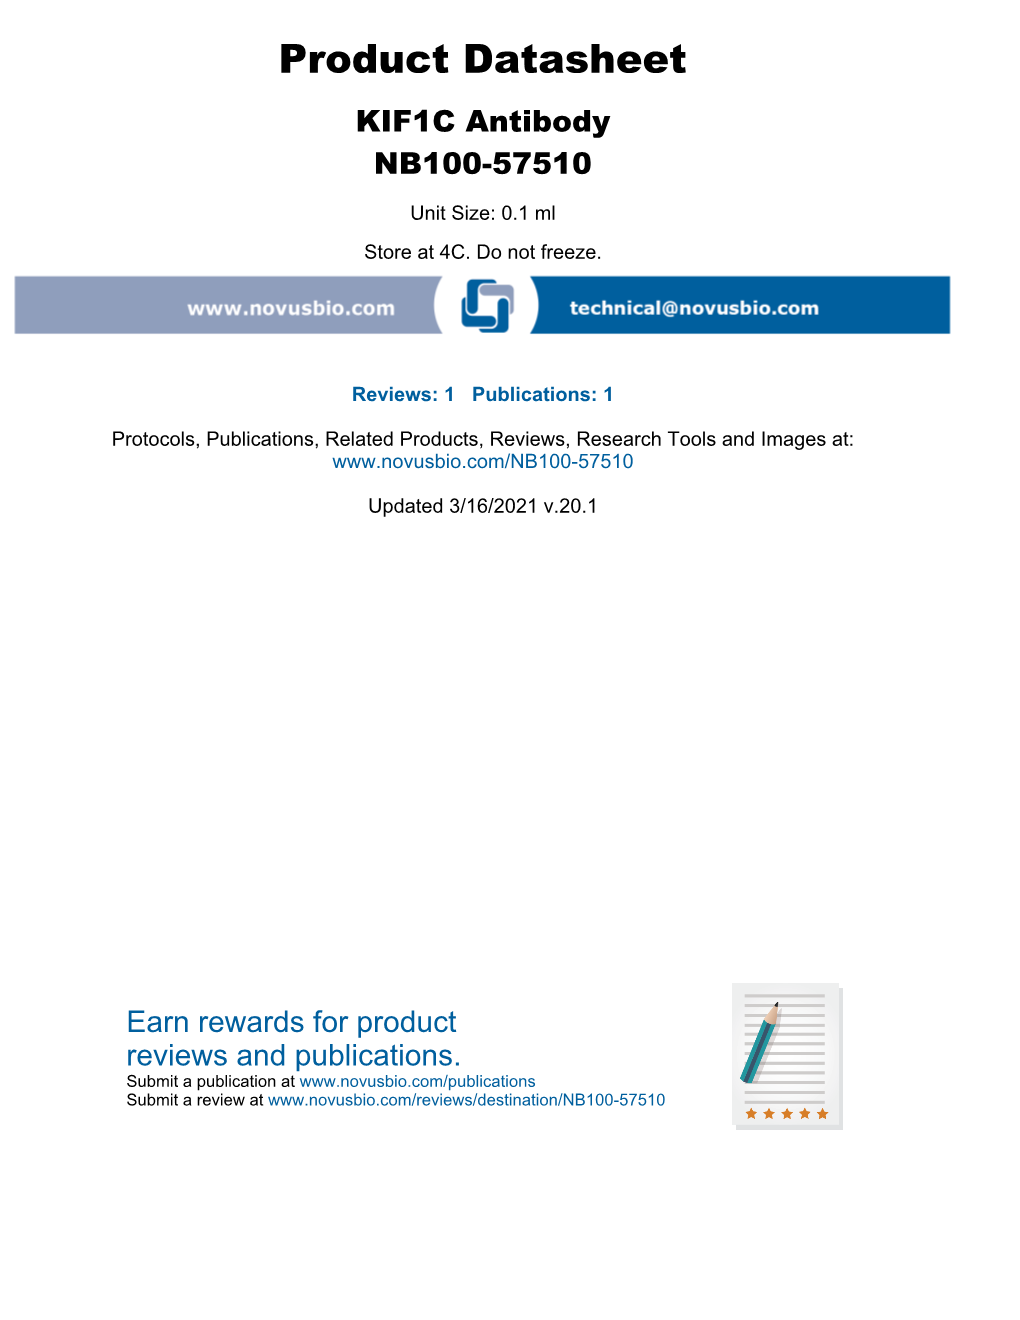 Product Datasheet KIF1C Antibody NB100-57510